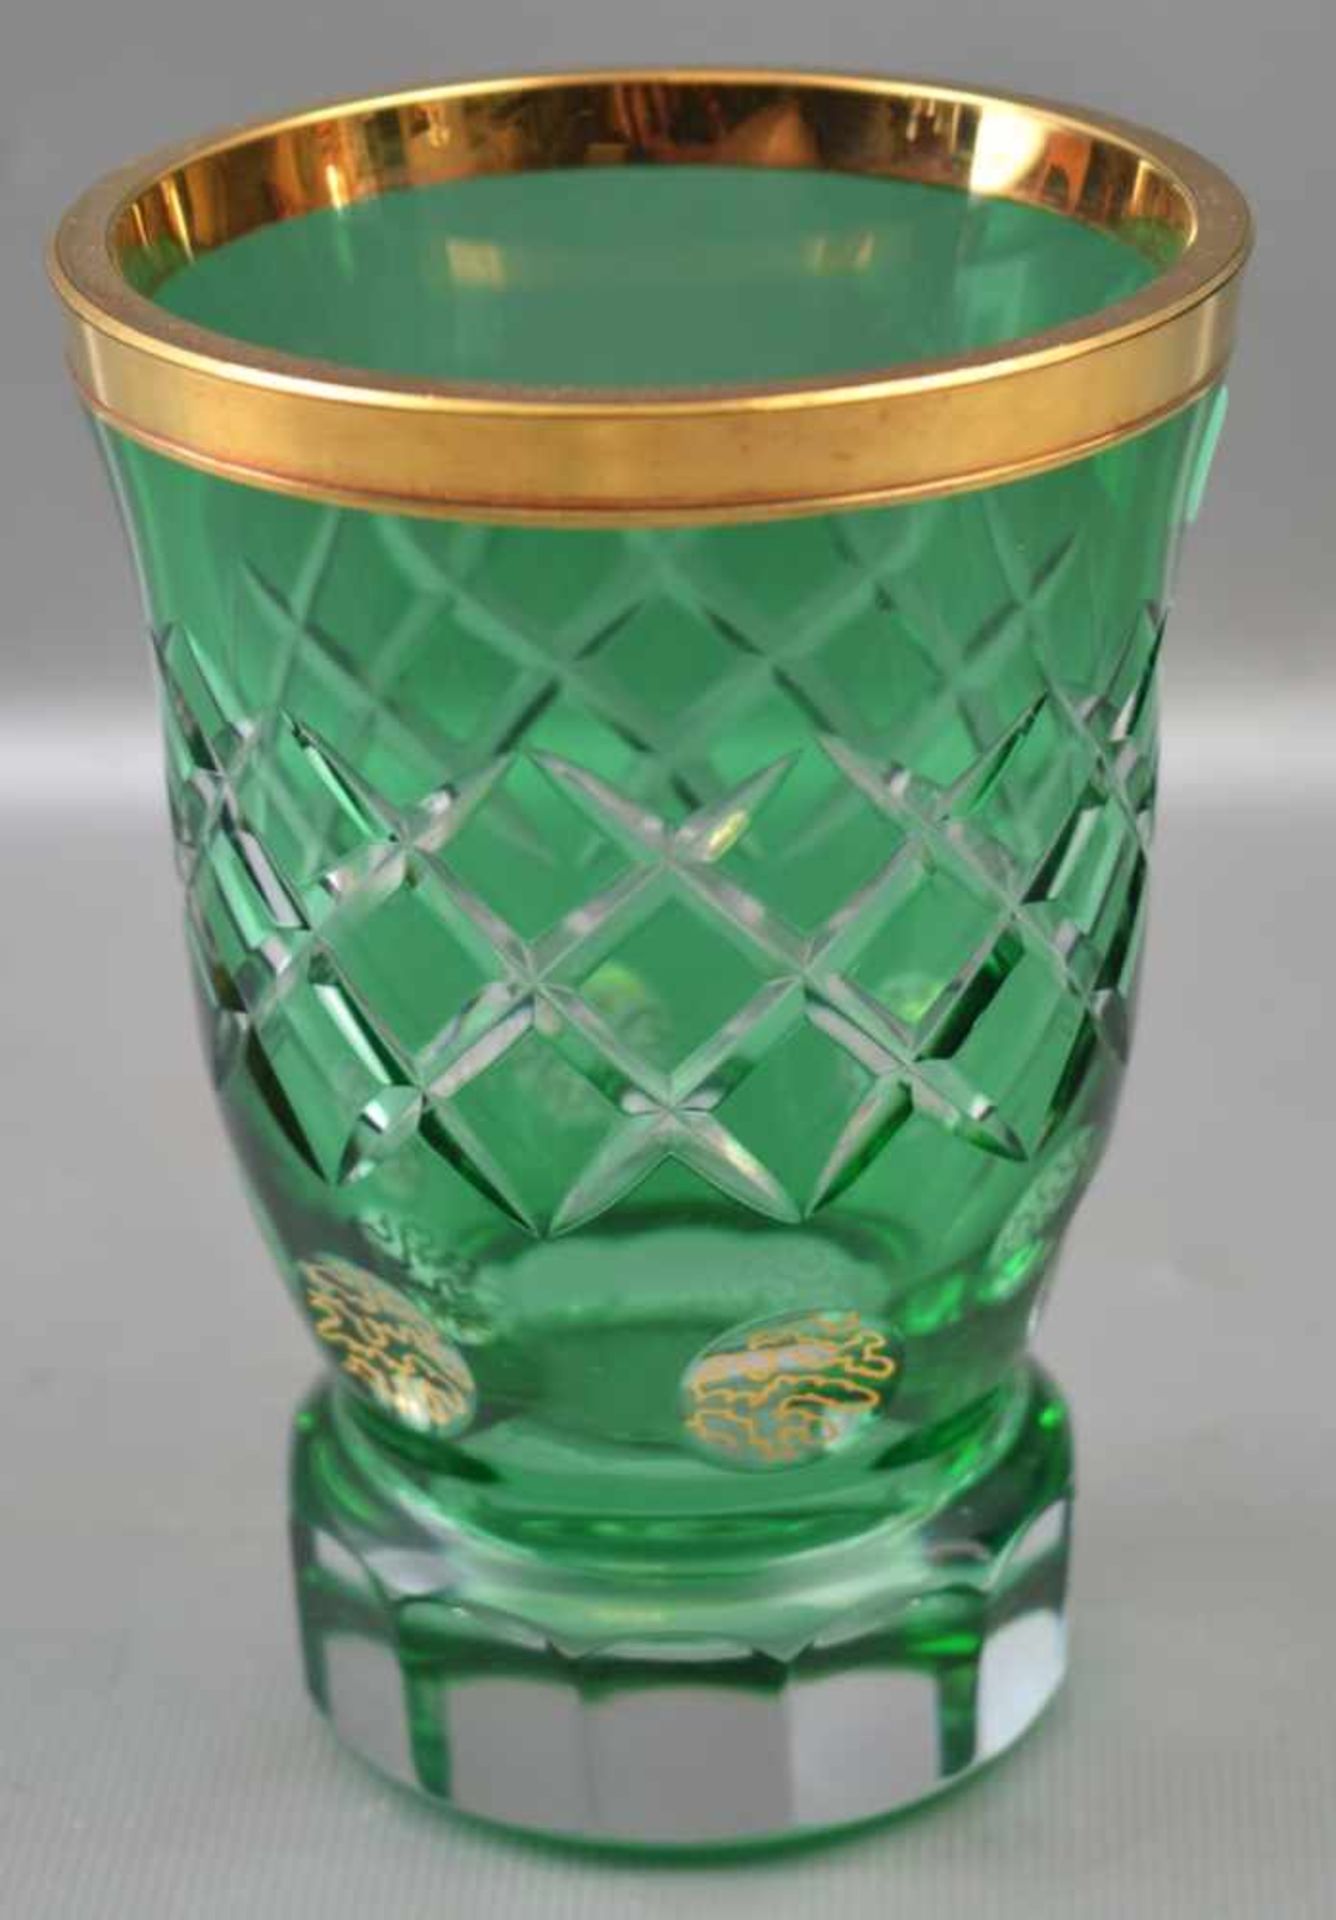 Becher farbl. Glas, geschliffen verziert, breiter Goldrand, mit grünem Überfang, H 12 cm